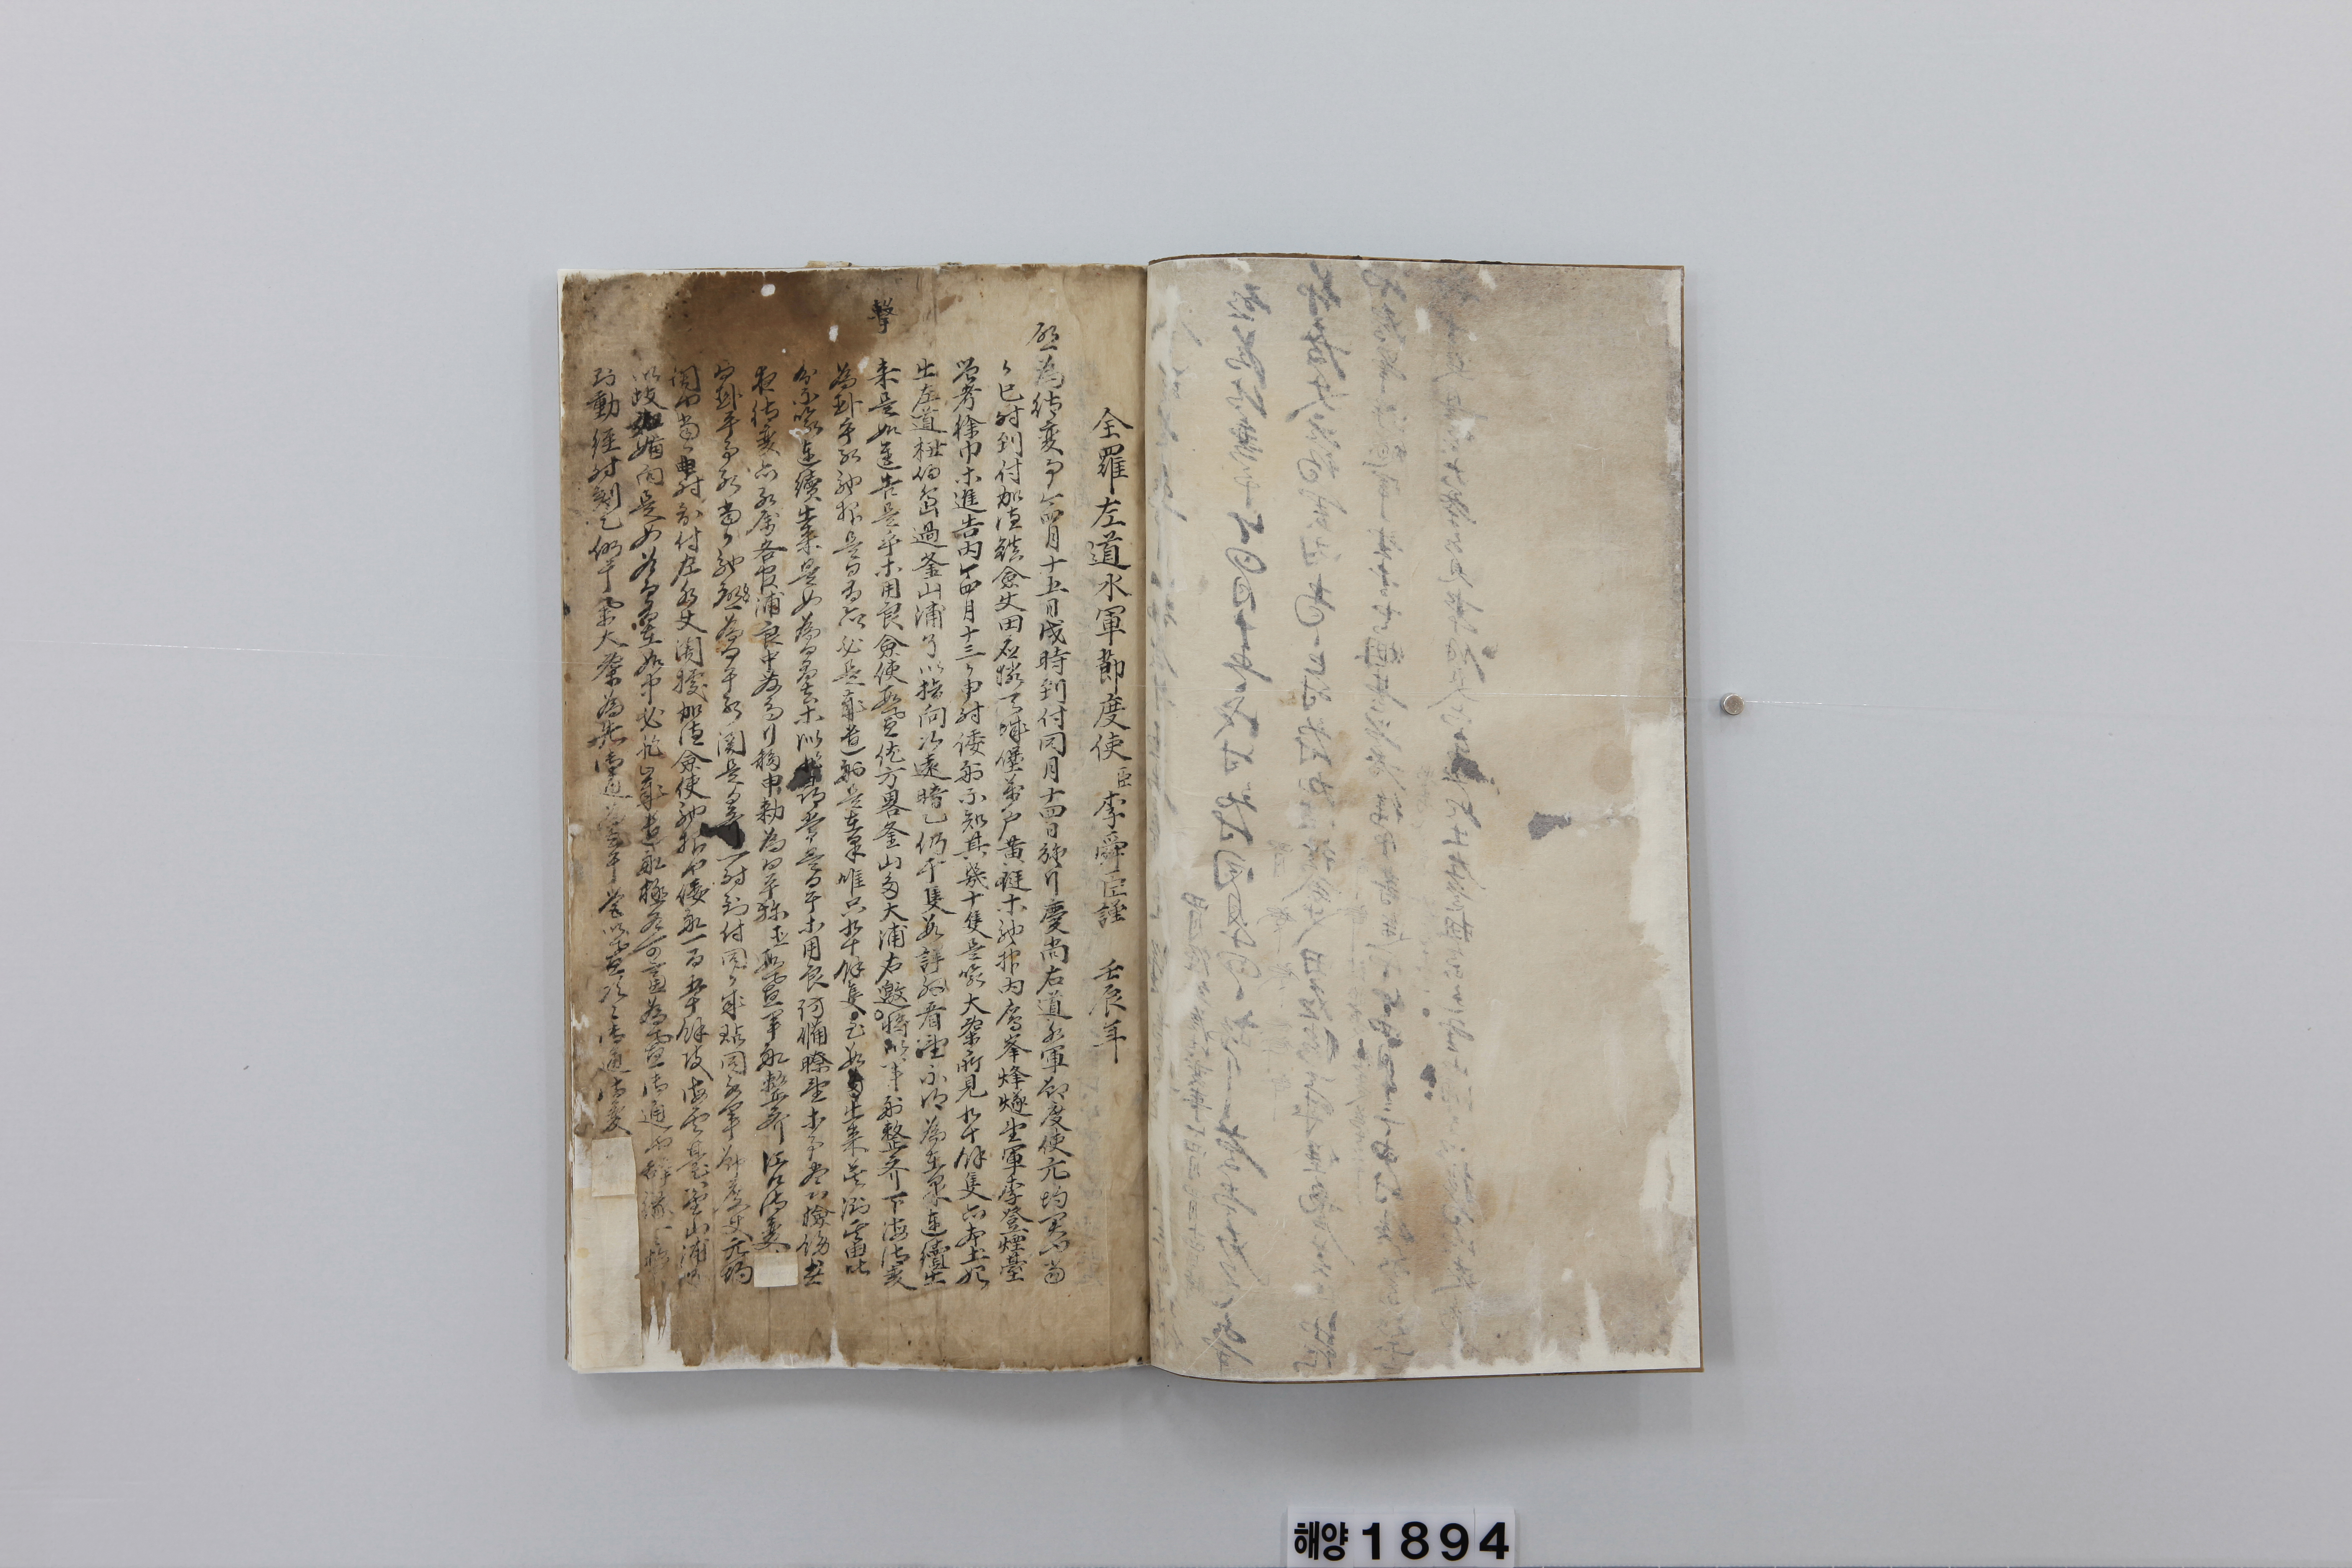 충민공계초(忠愍公啓草 Document of Marine Office (Haegwan)3